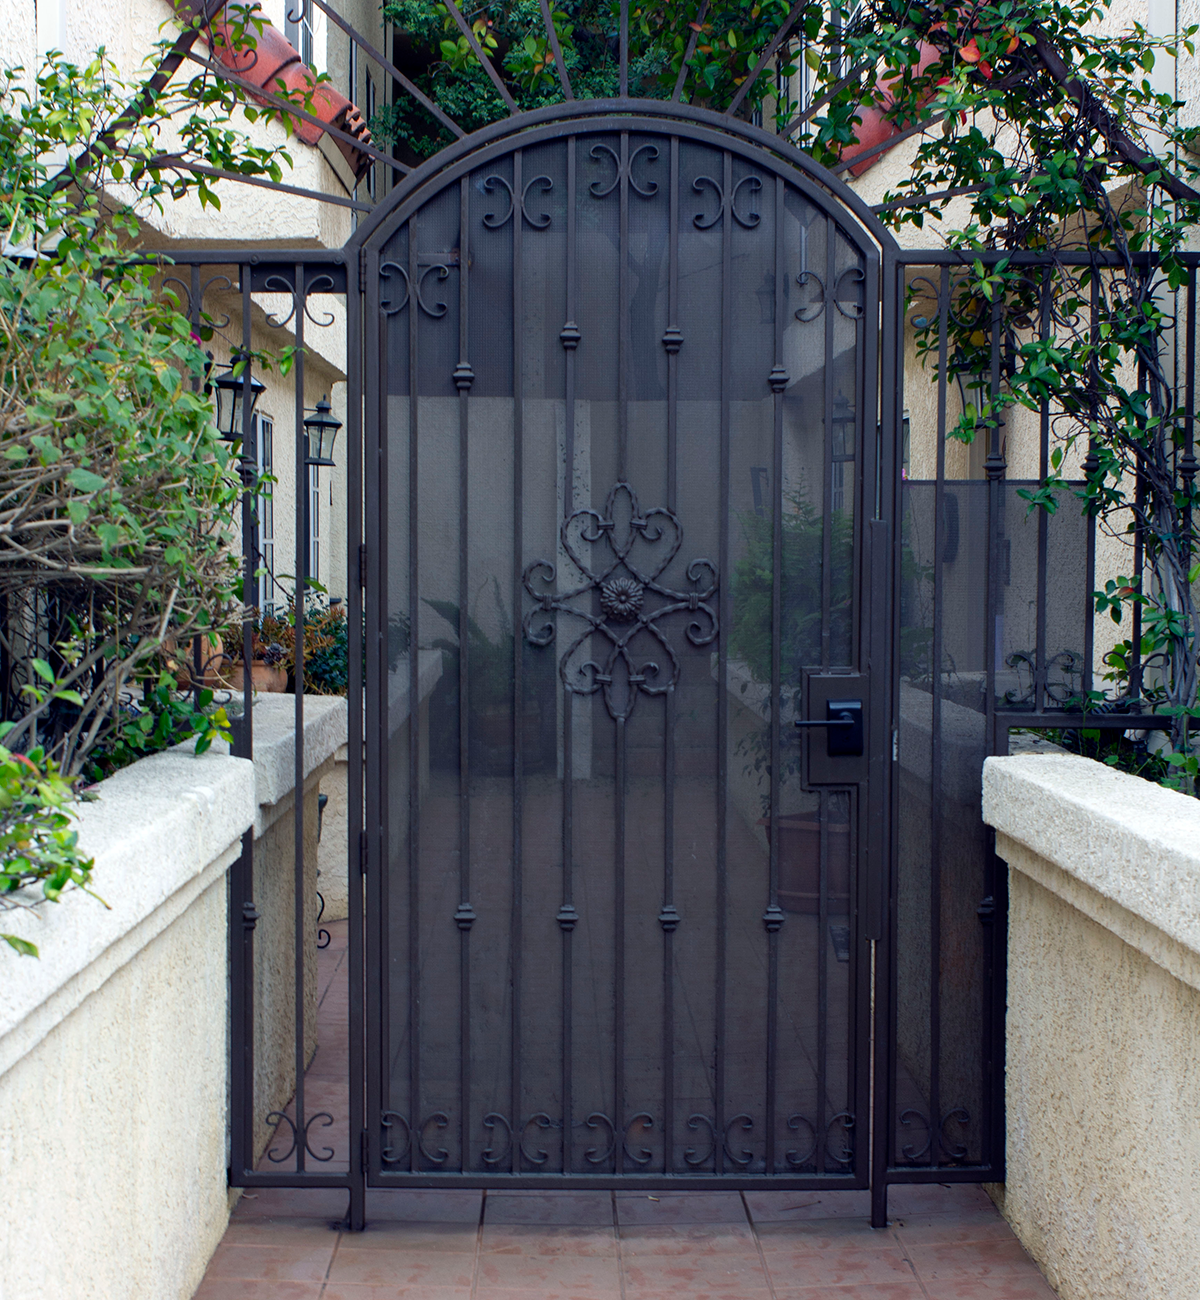 Iron entry gate